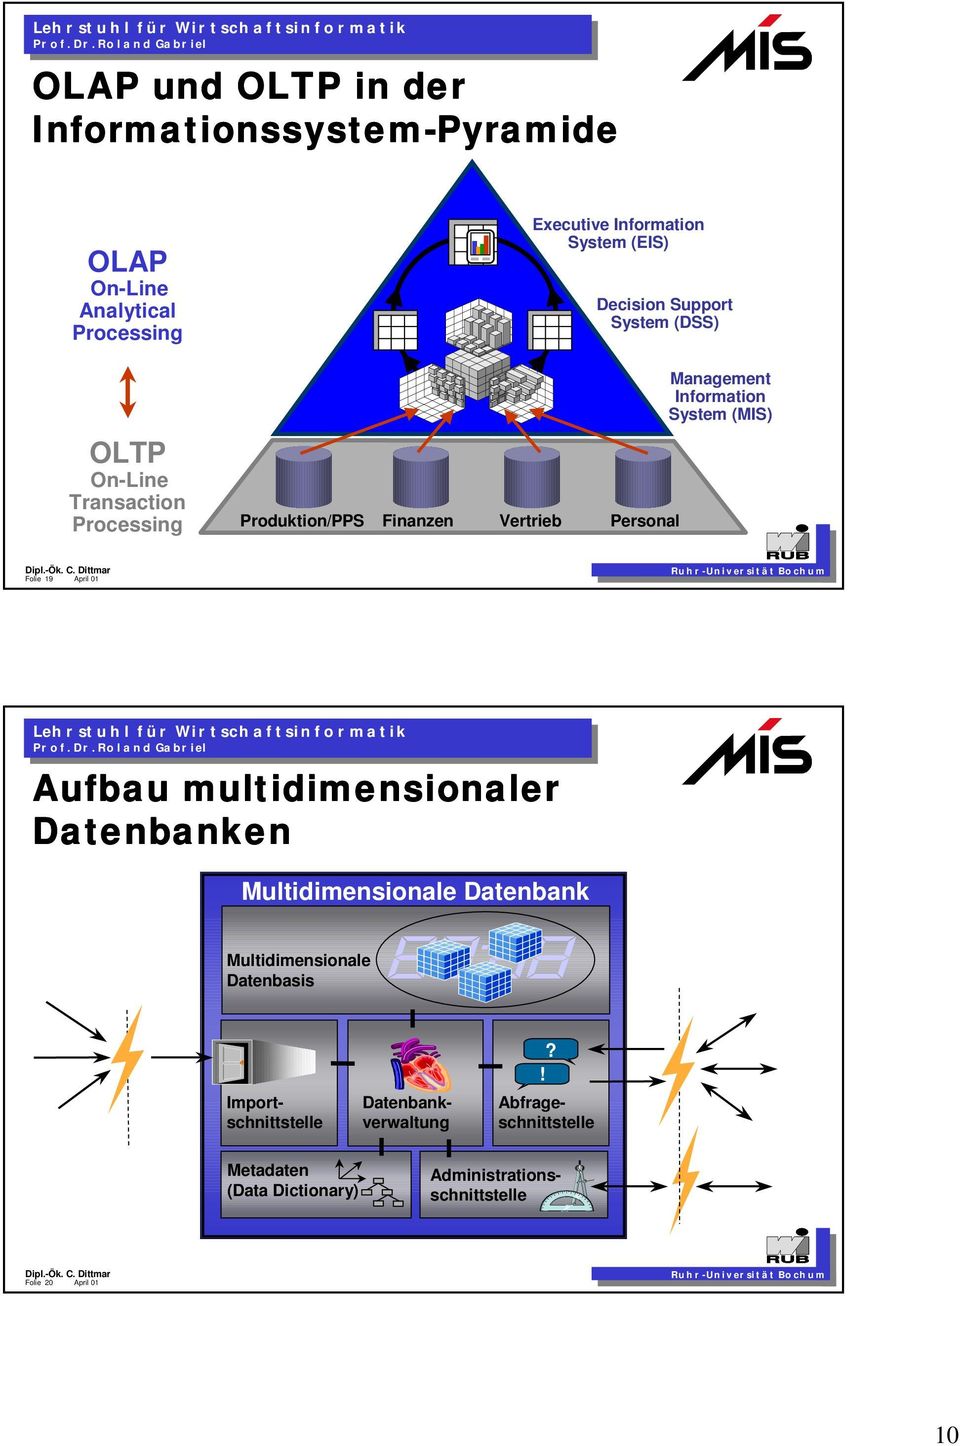 Information System (MIS) Folie 19 April 01 Aufbau multidimensionaler Datenbanken Multidimensionale Datenbank Multidimensionale